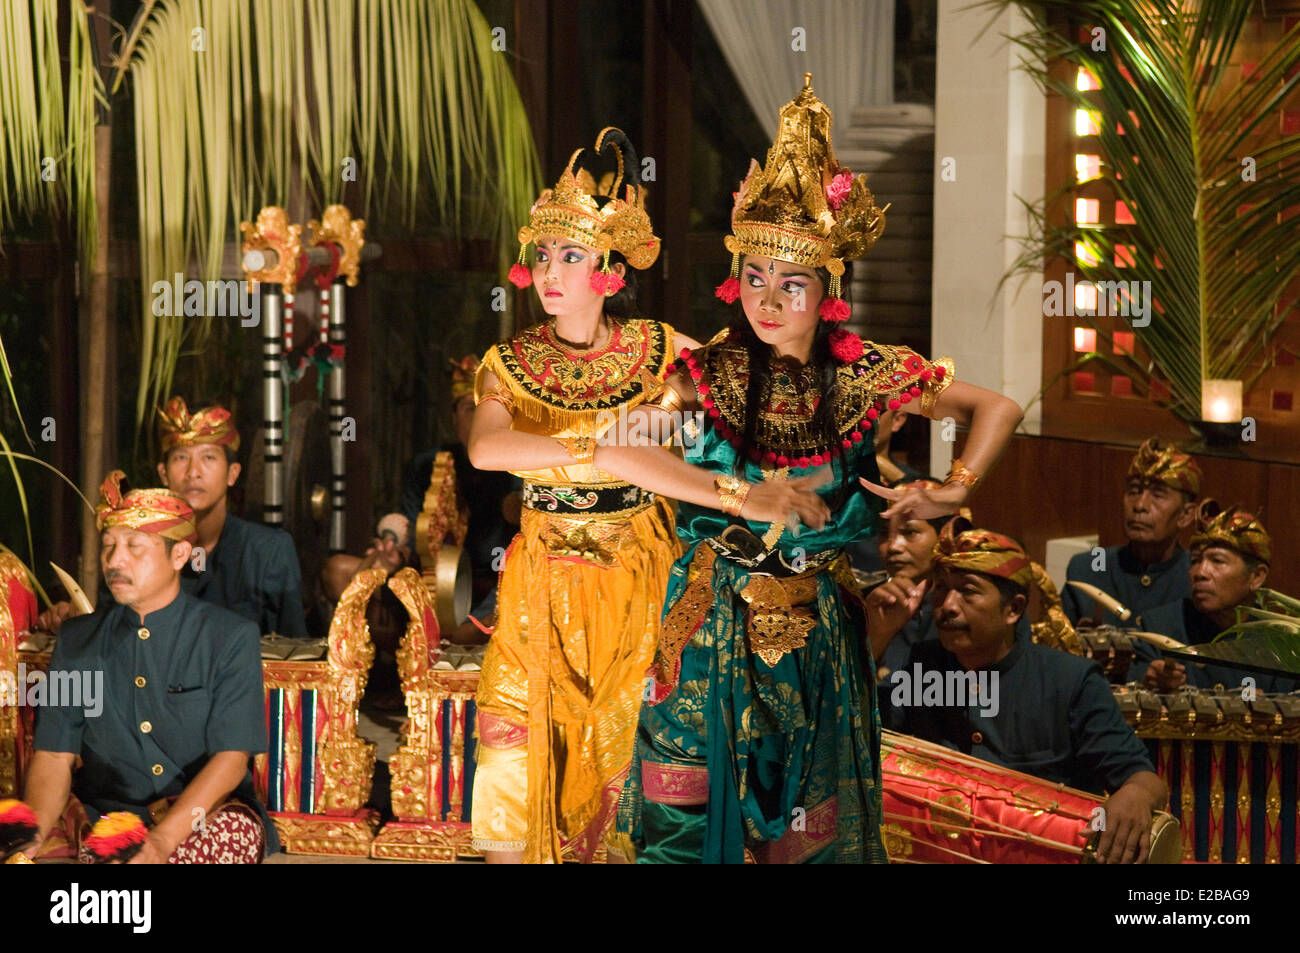 L'INDONÉSIE, Bali, Jimbaran, Orient Express Hôtel Jimbaran Puri Bali, legong danse, danseurs et musiciens Banque D'Images